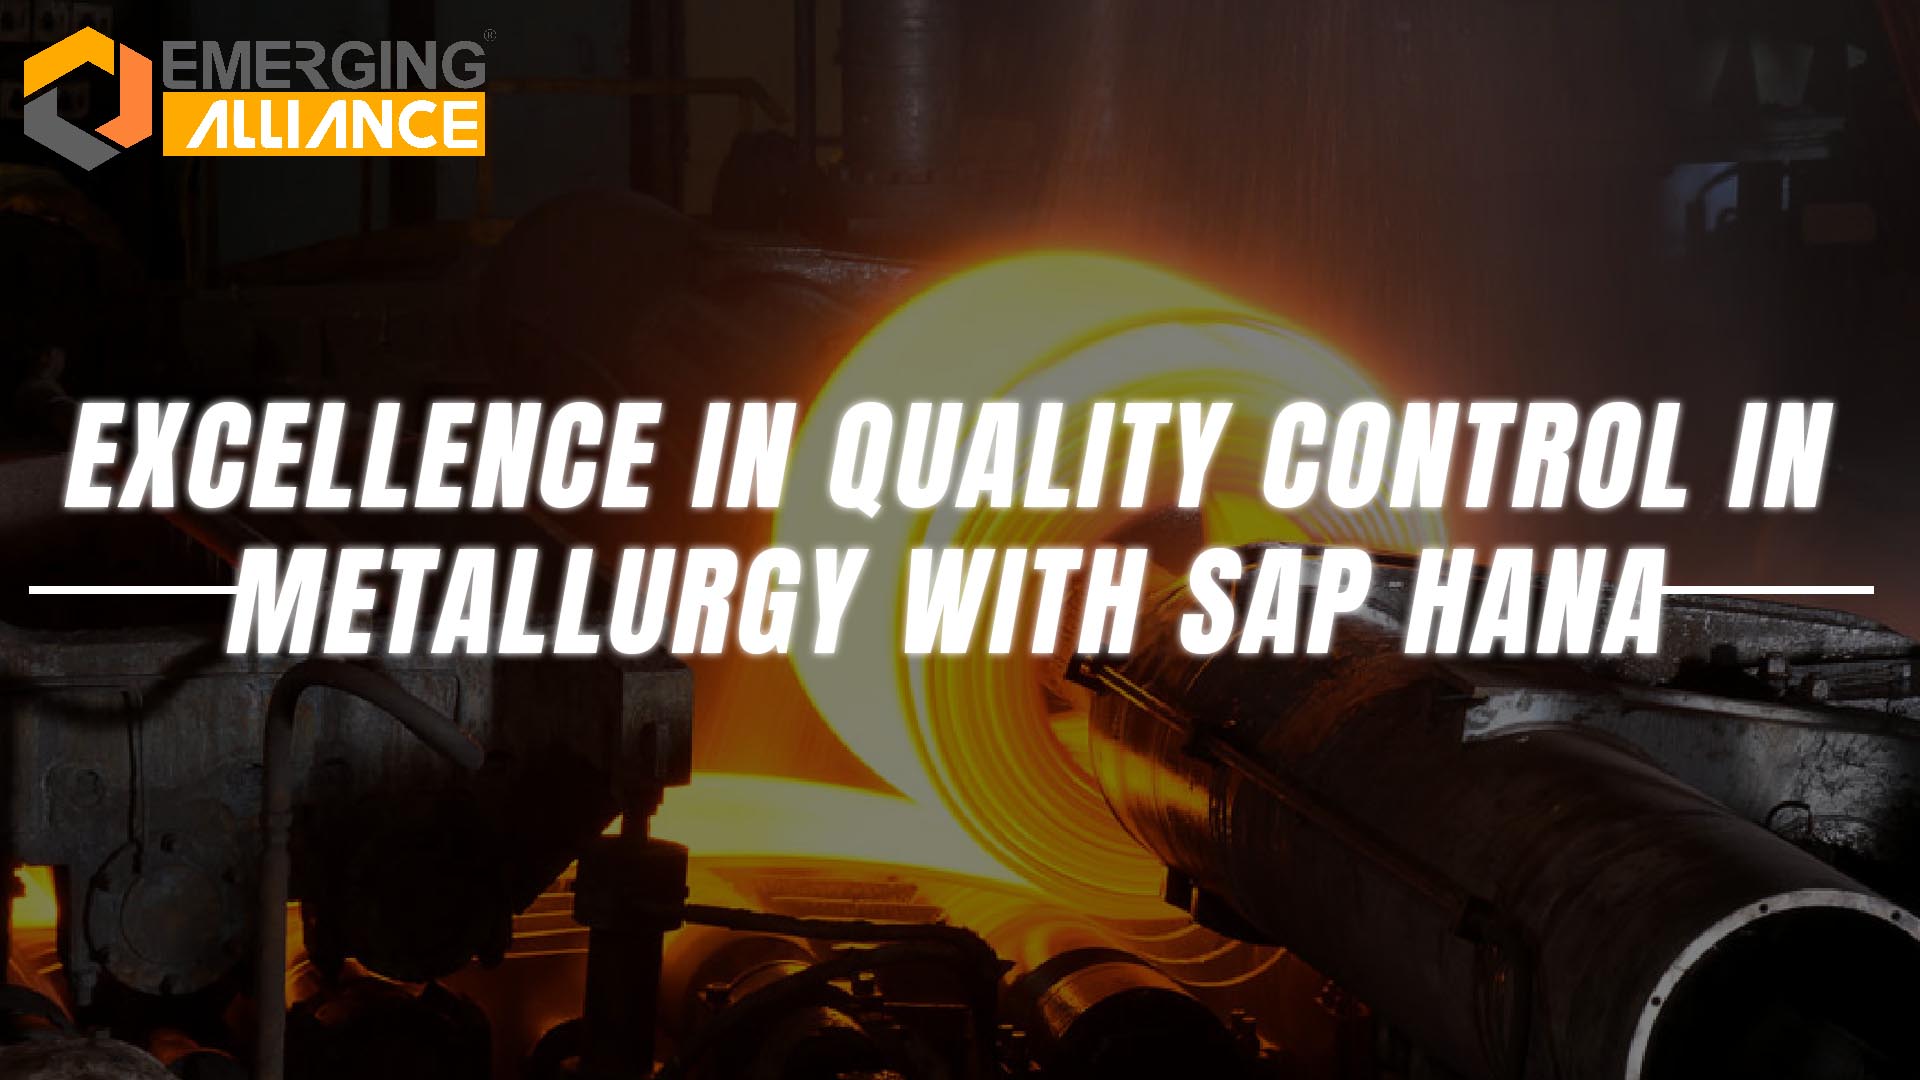 SAP HANA for Metallurgy